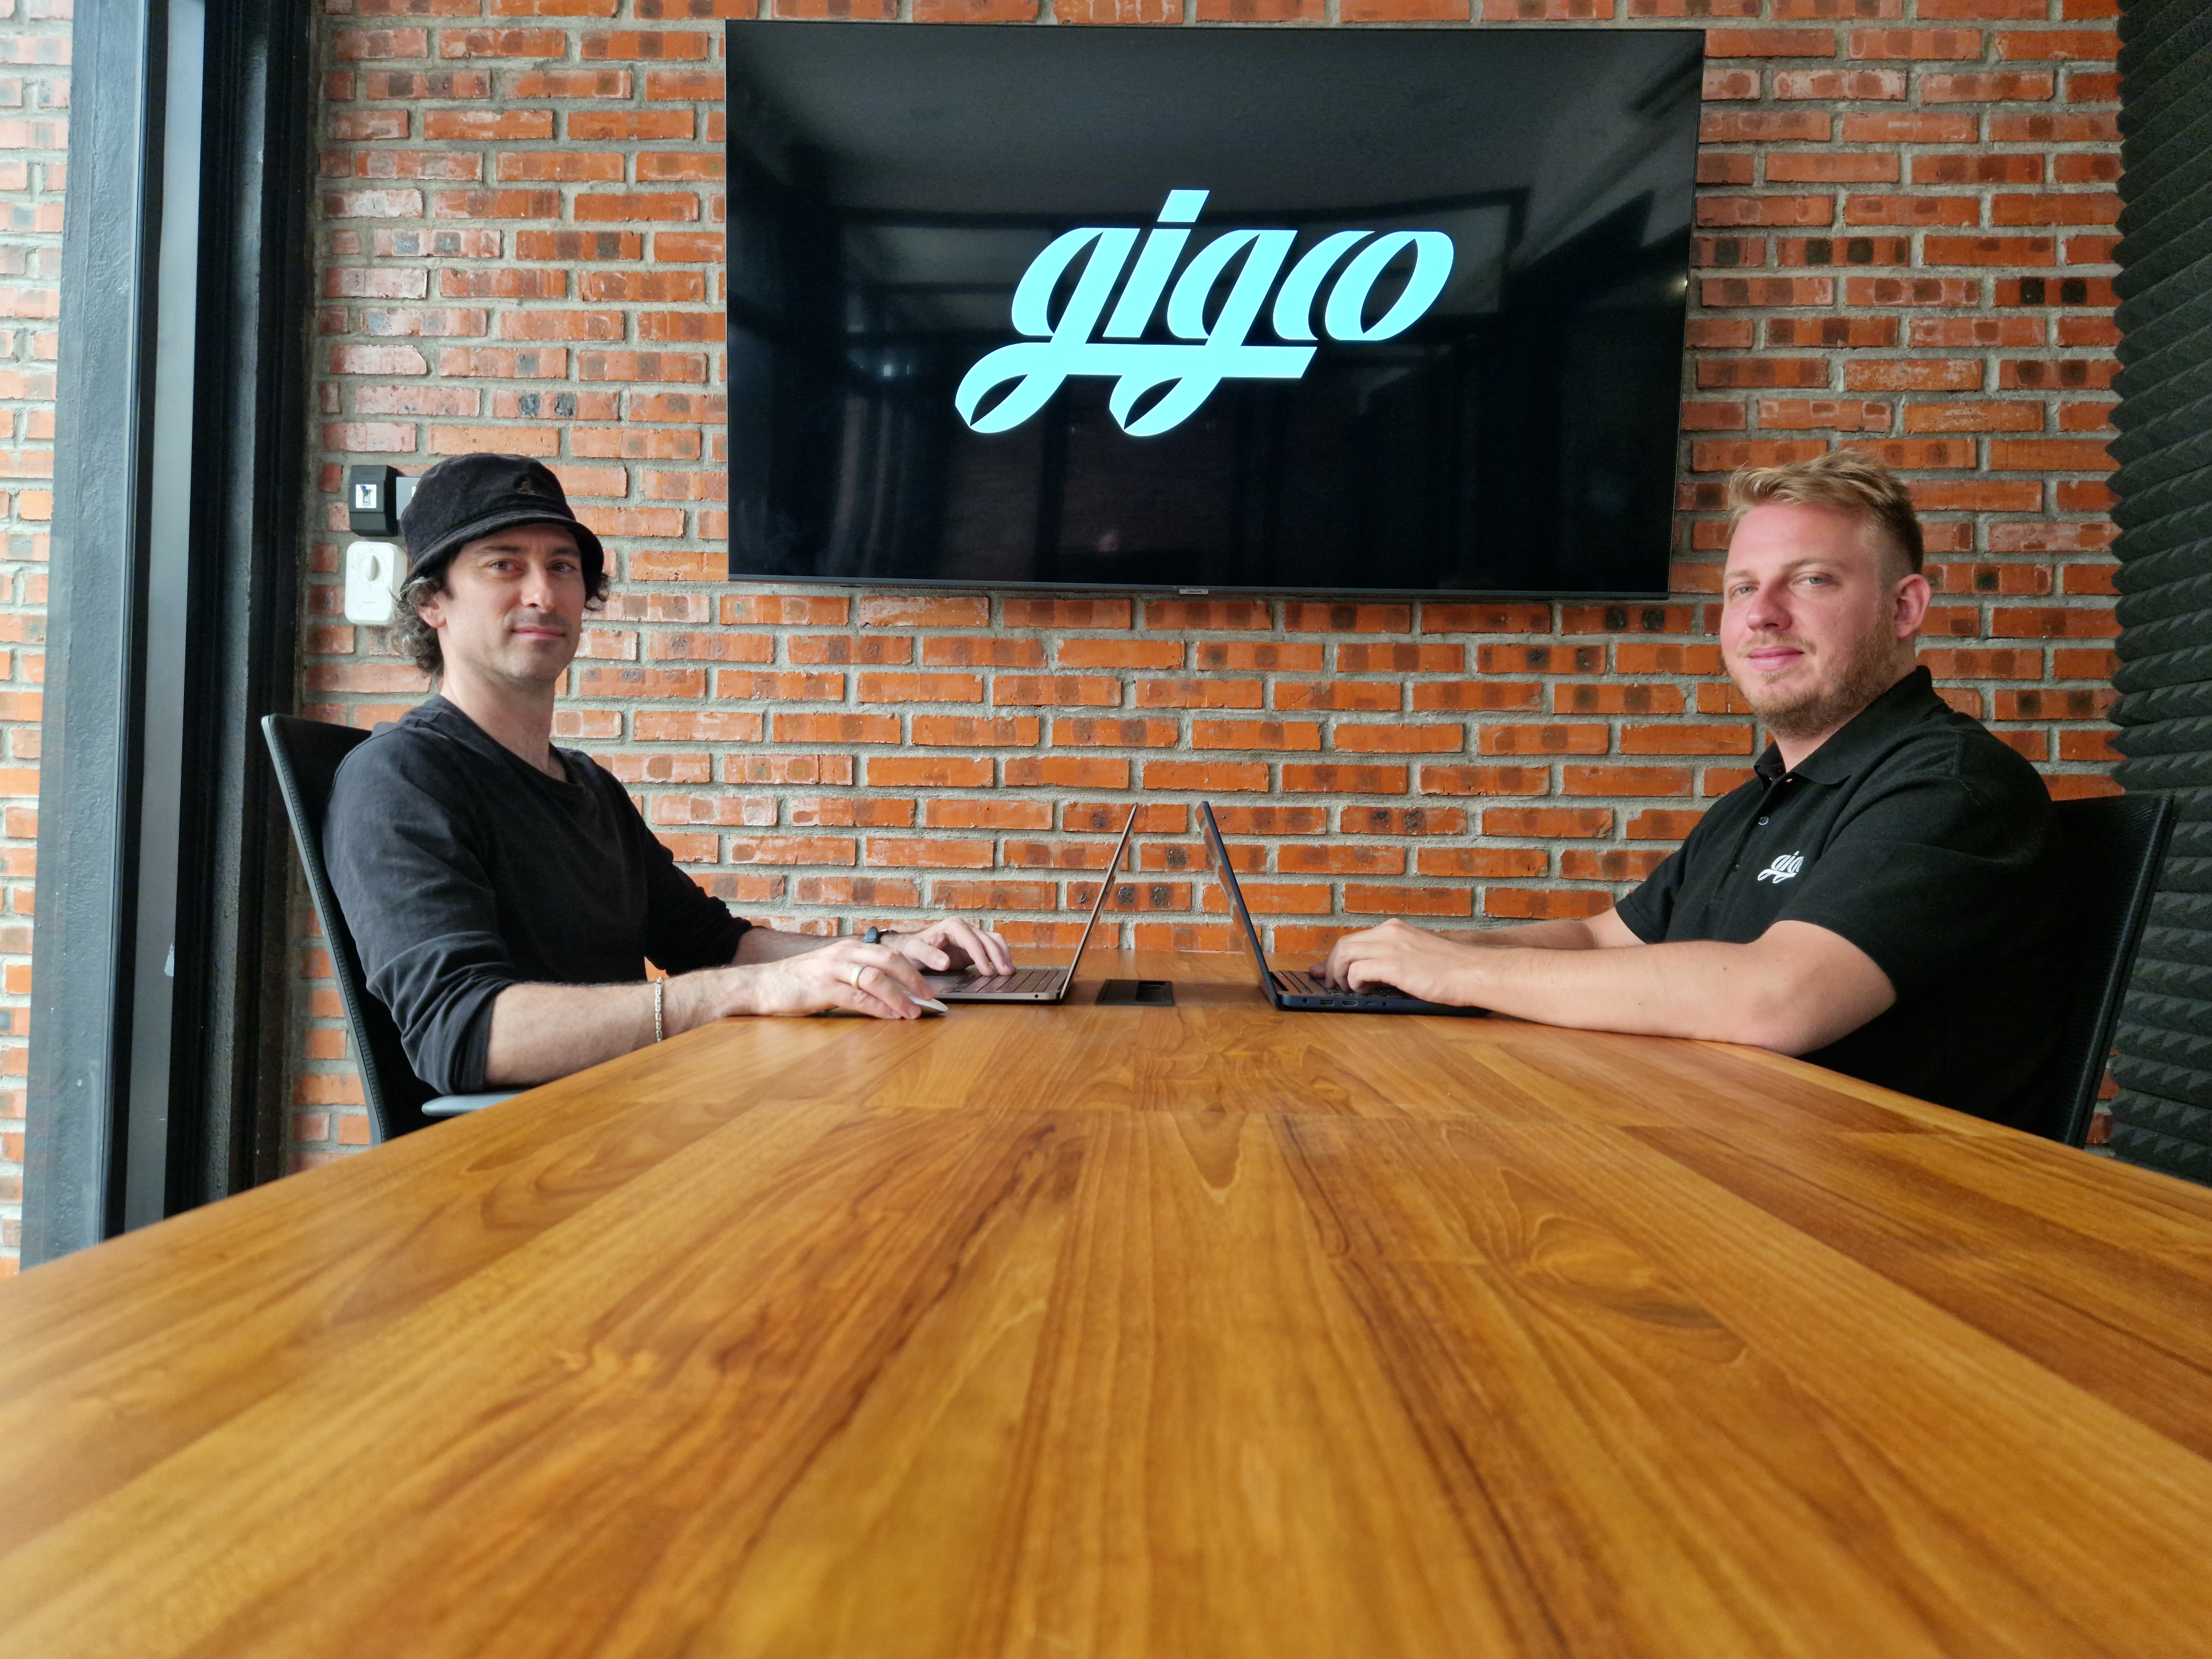 GIGCO app founders Kindlan and De Vrijer